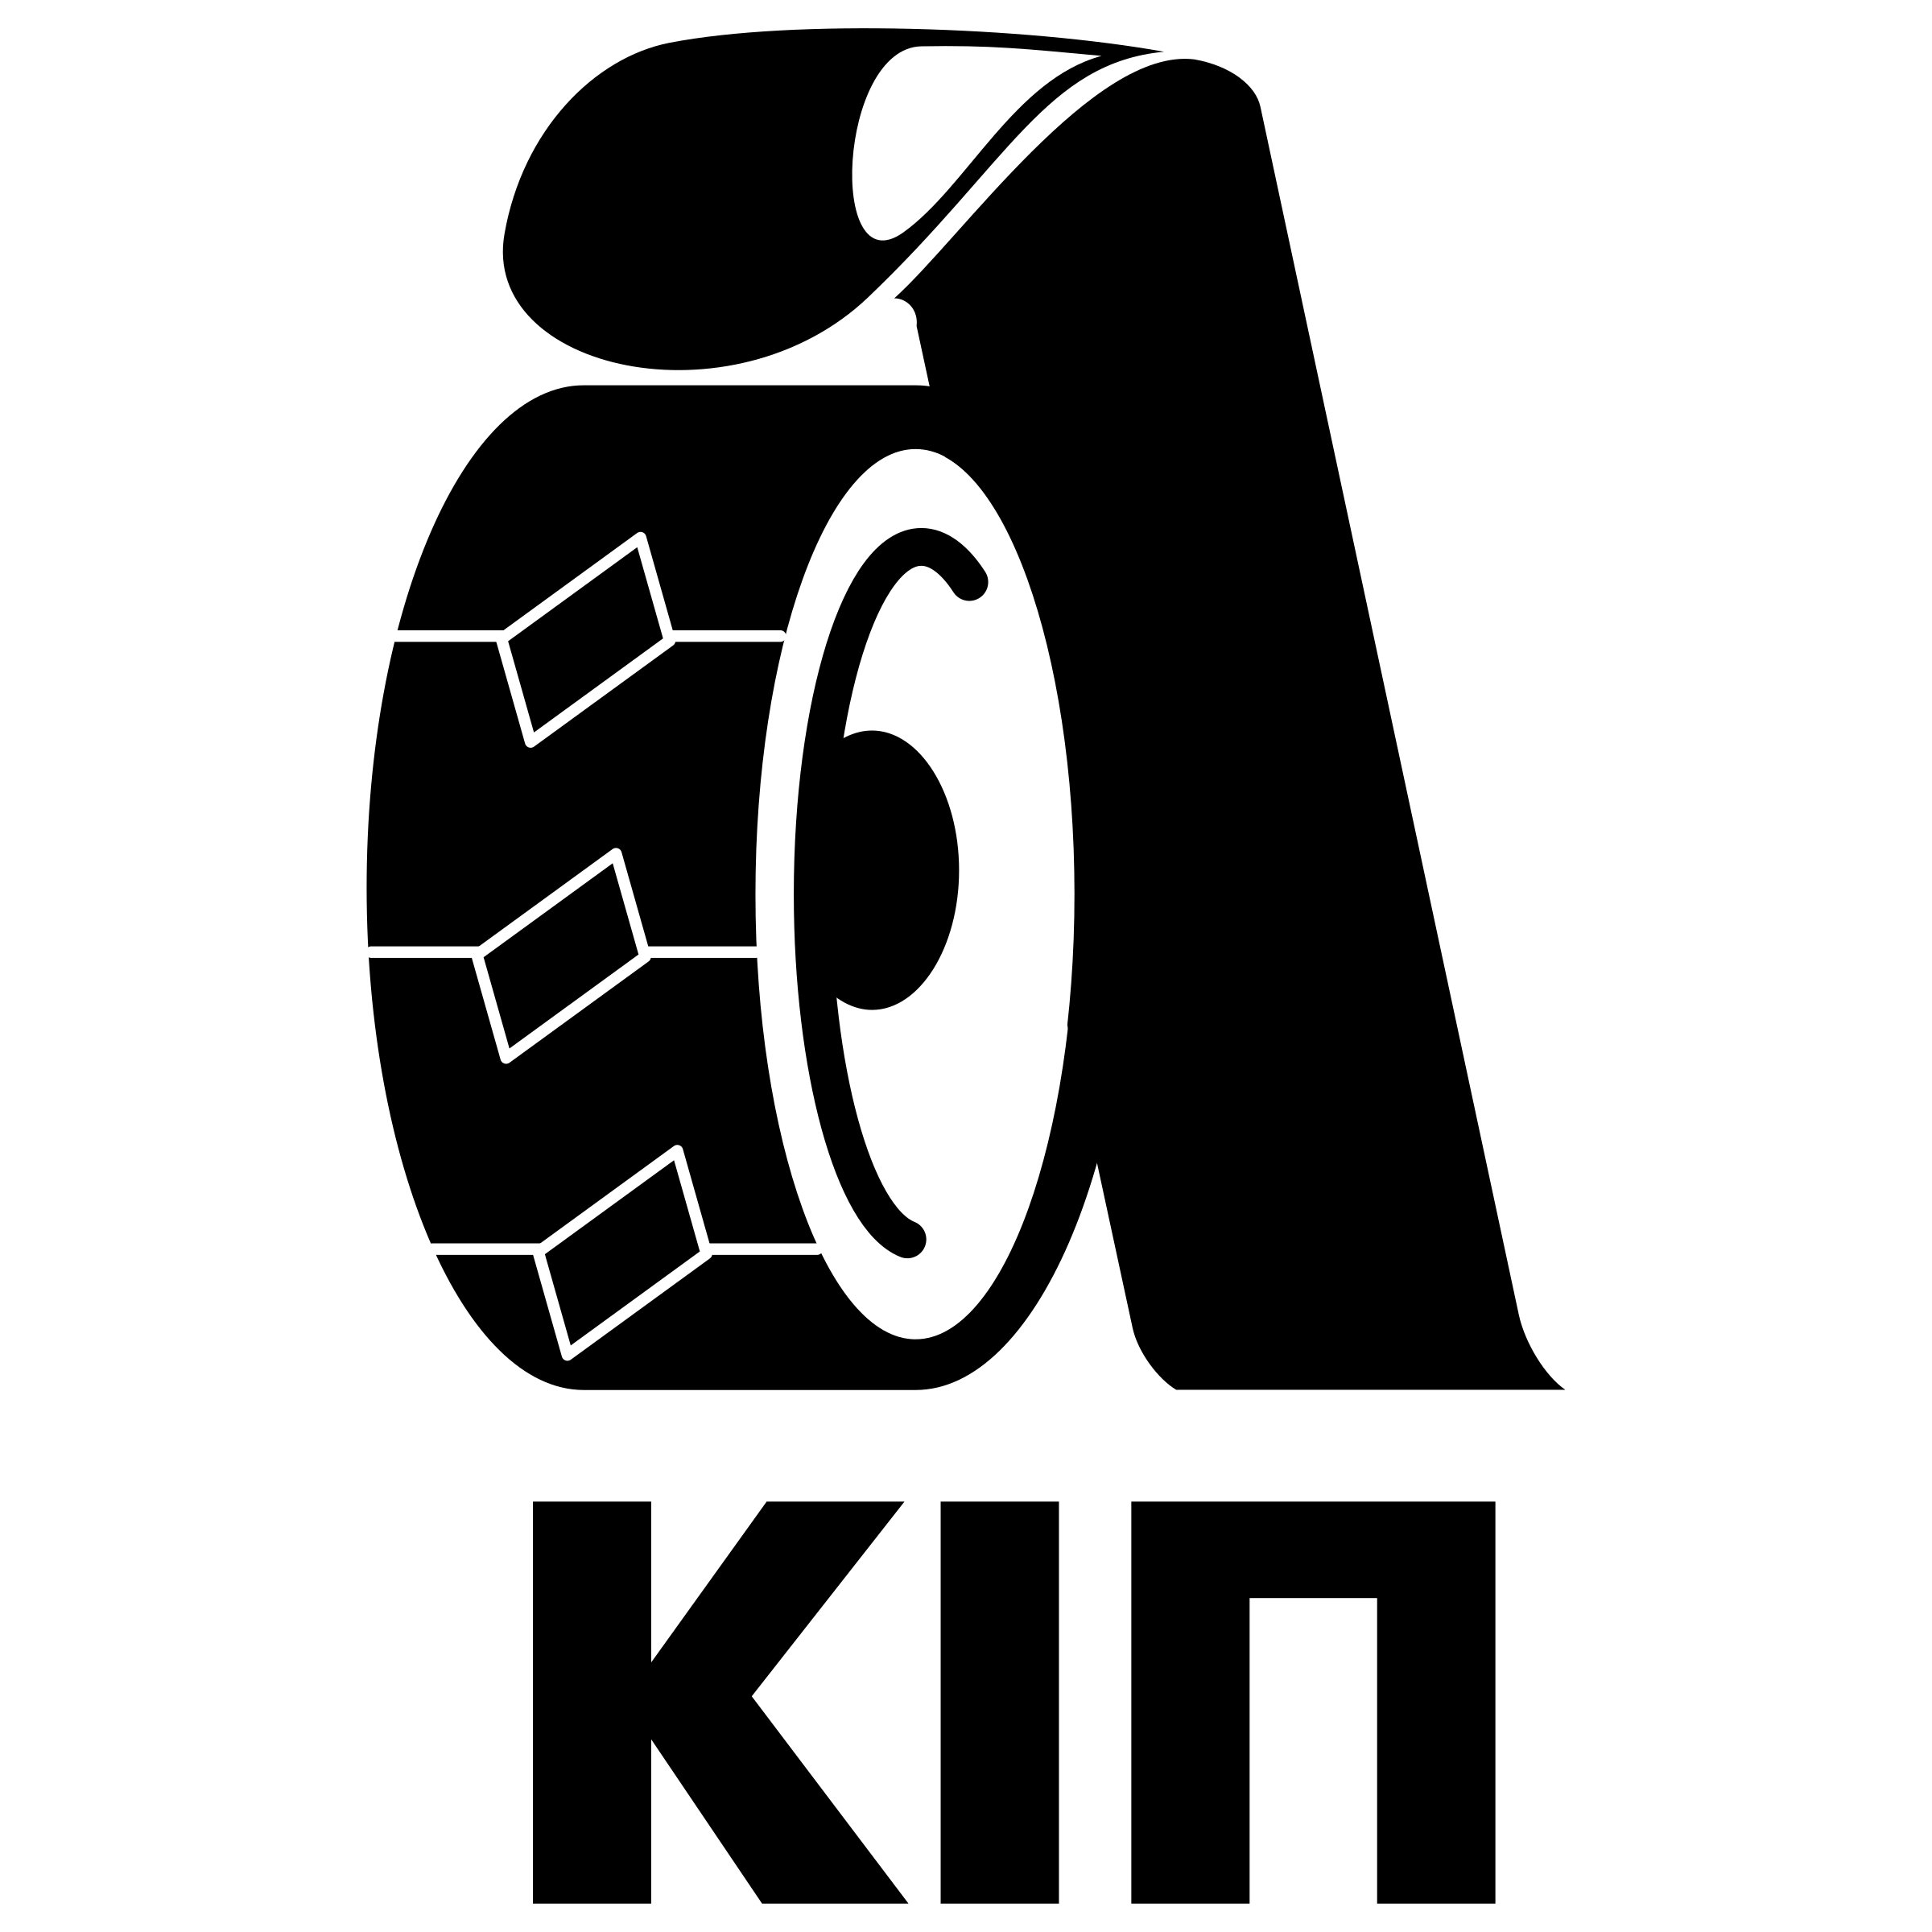 Kip Logo - KIP Logo PNG Transparent & SVG Vector - Freebie Supply